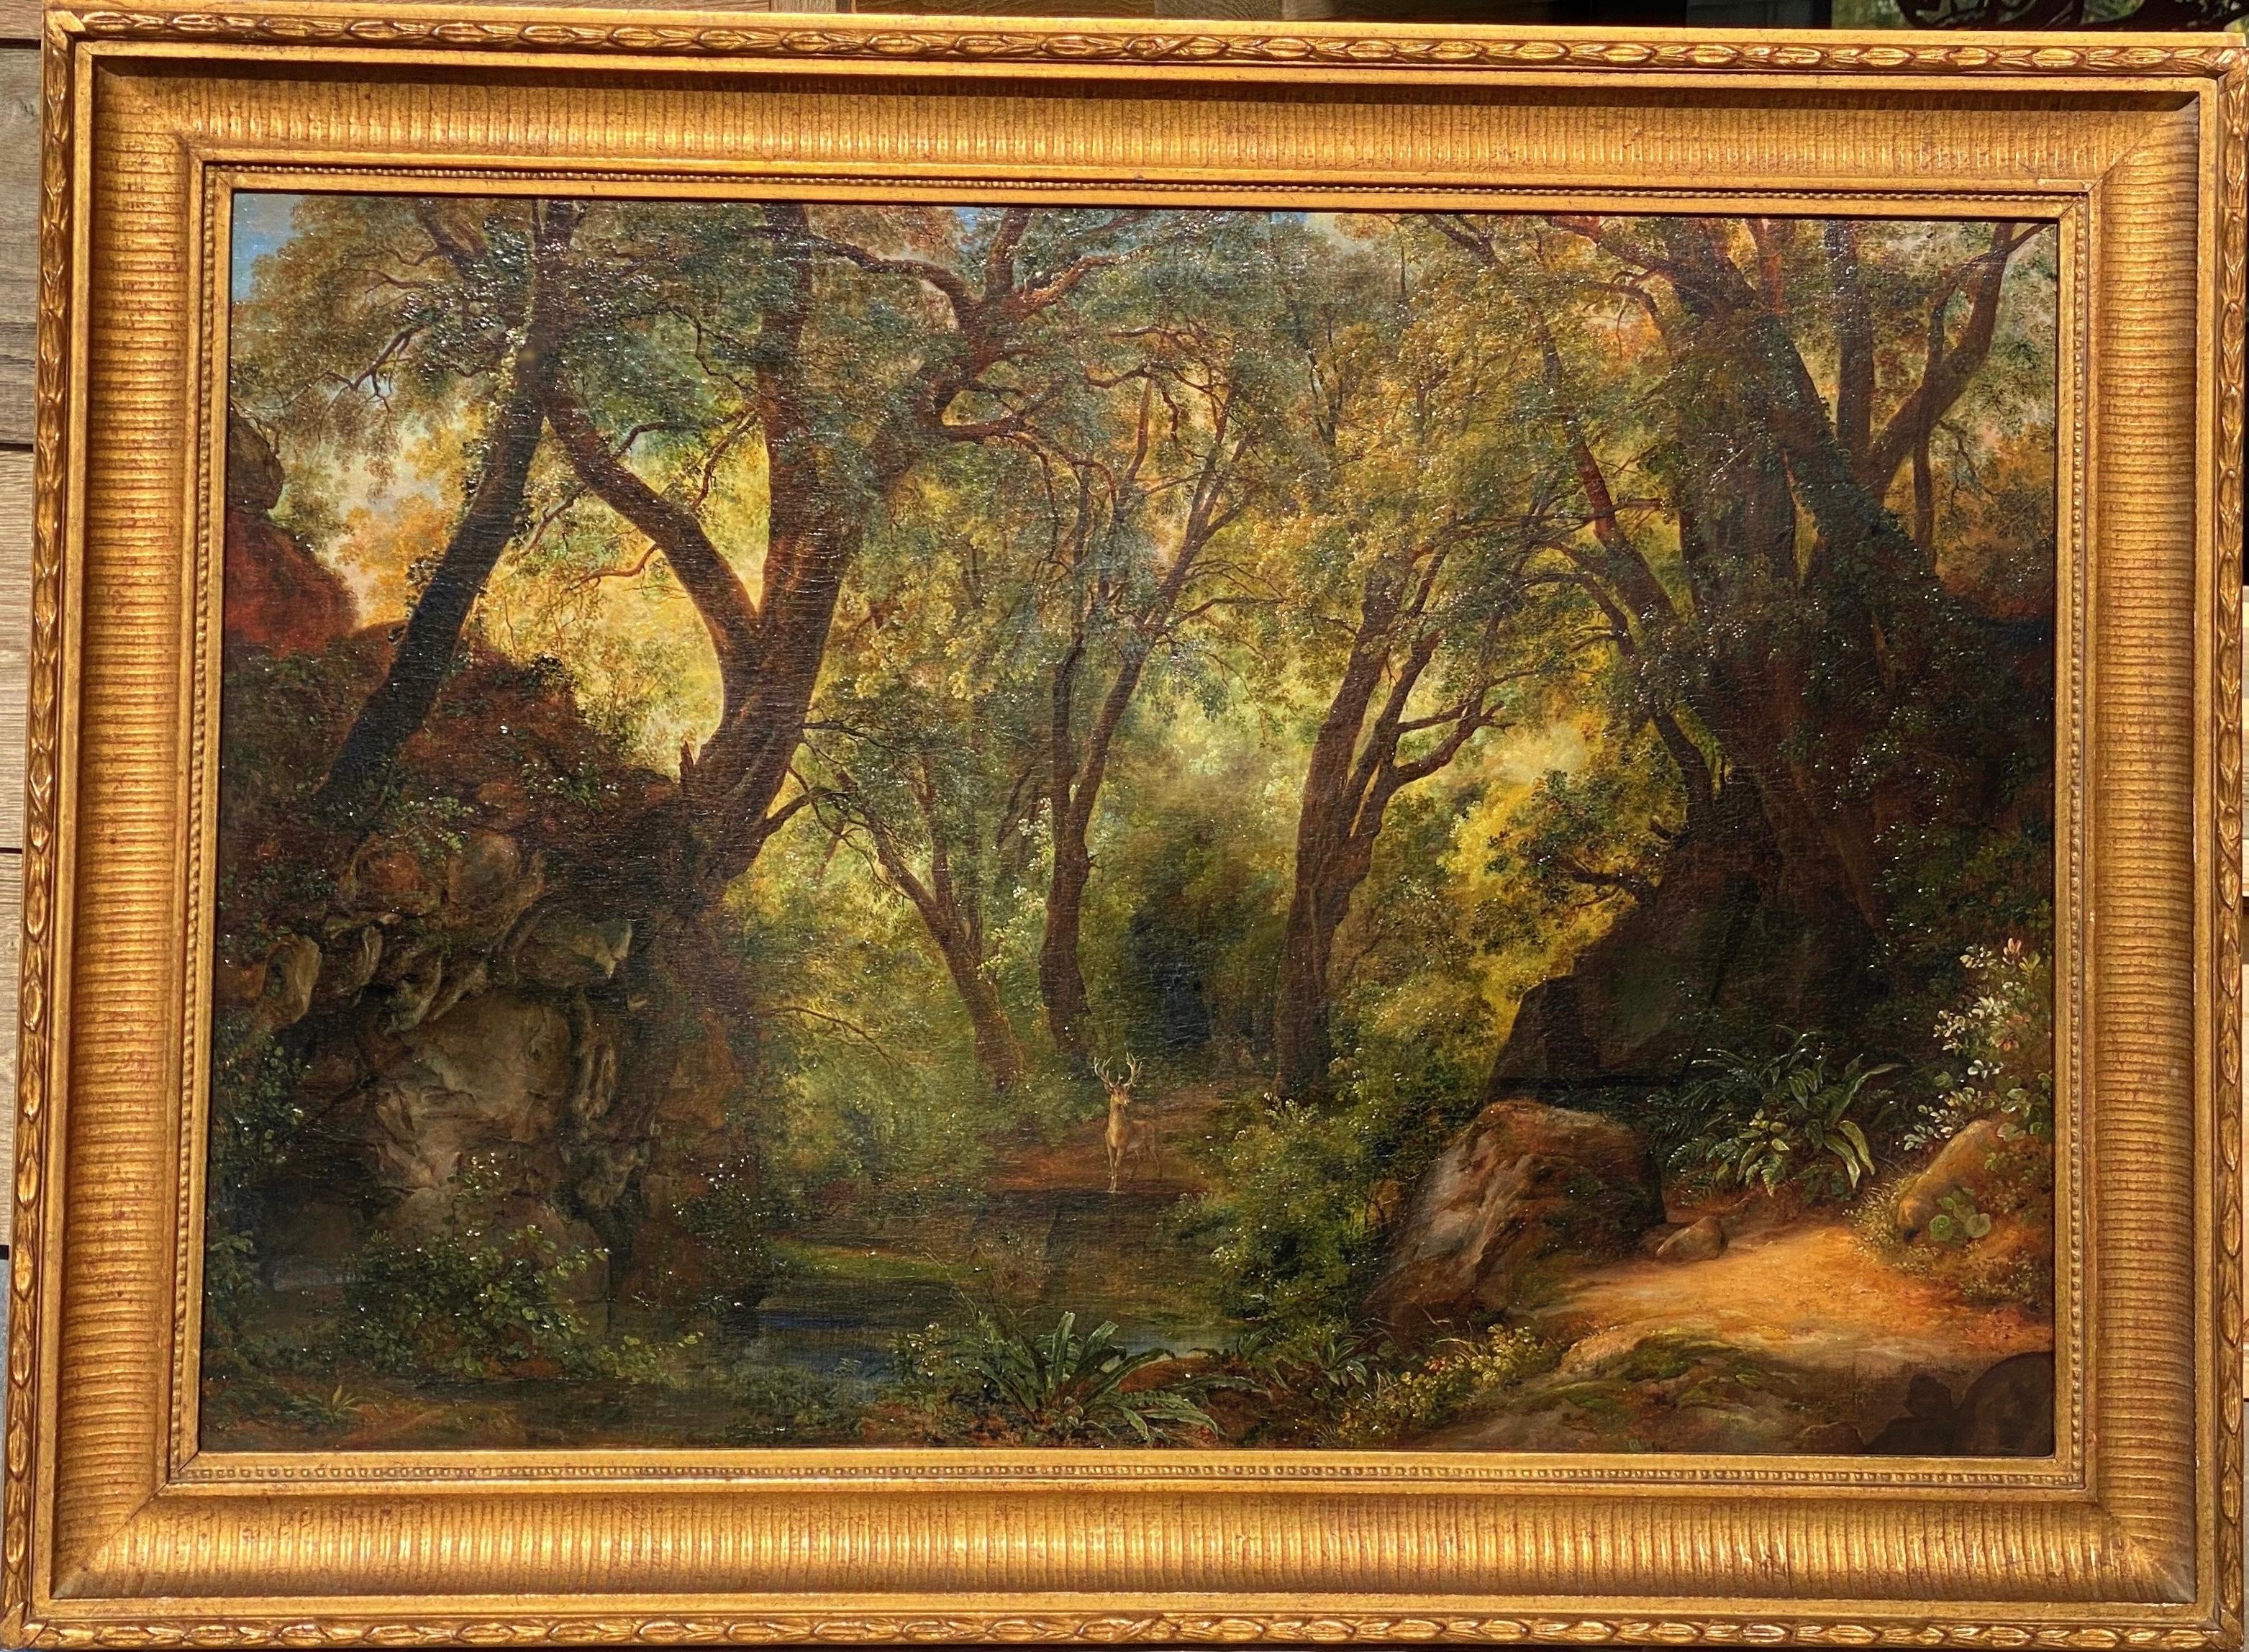 Johann Wilhelm Schirmer  Animal Painting - 19th century German painting - Deer family in a forest - Romantic Landscape 